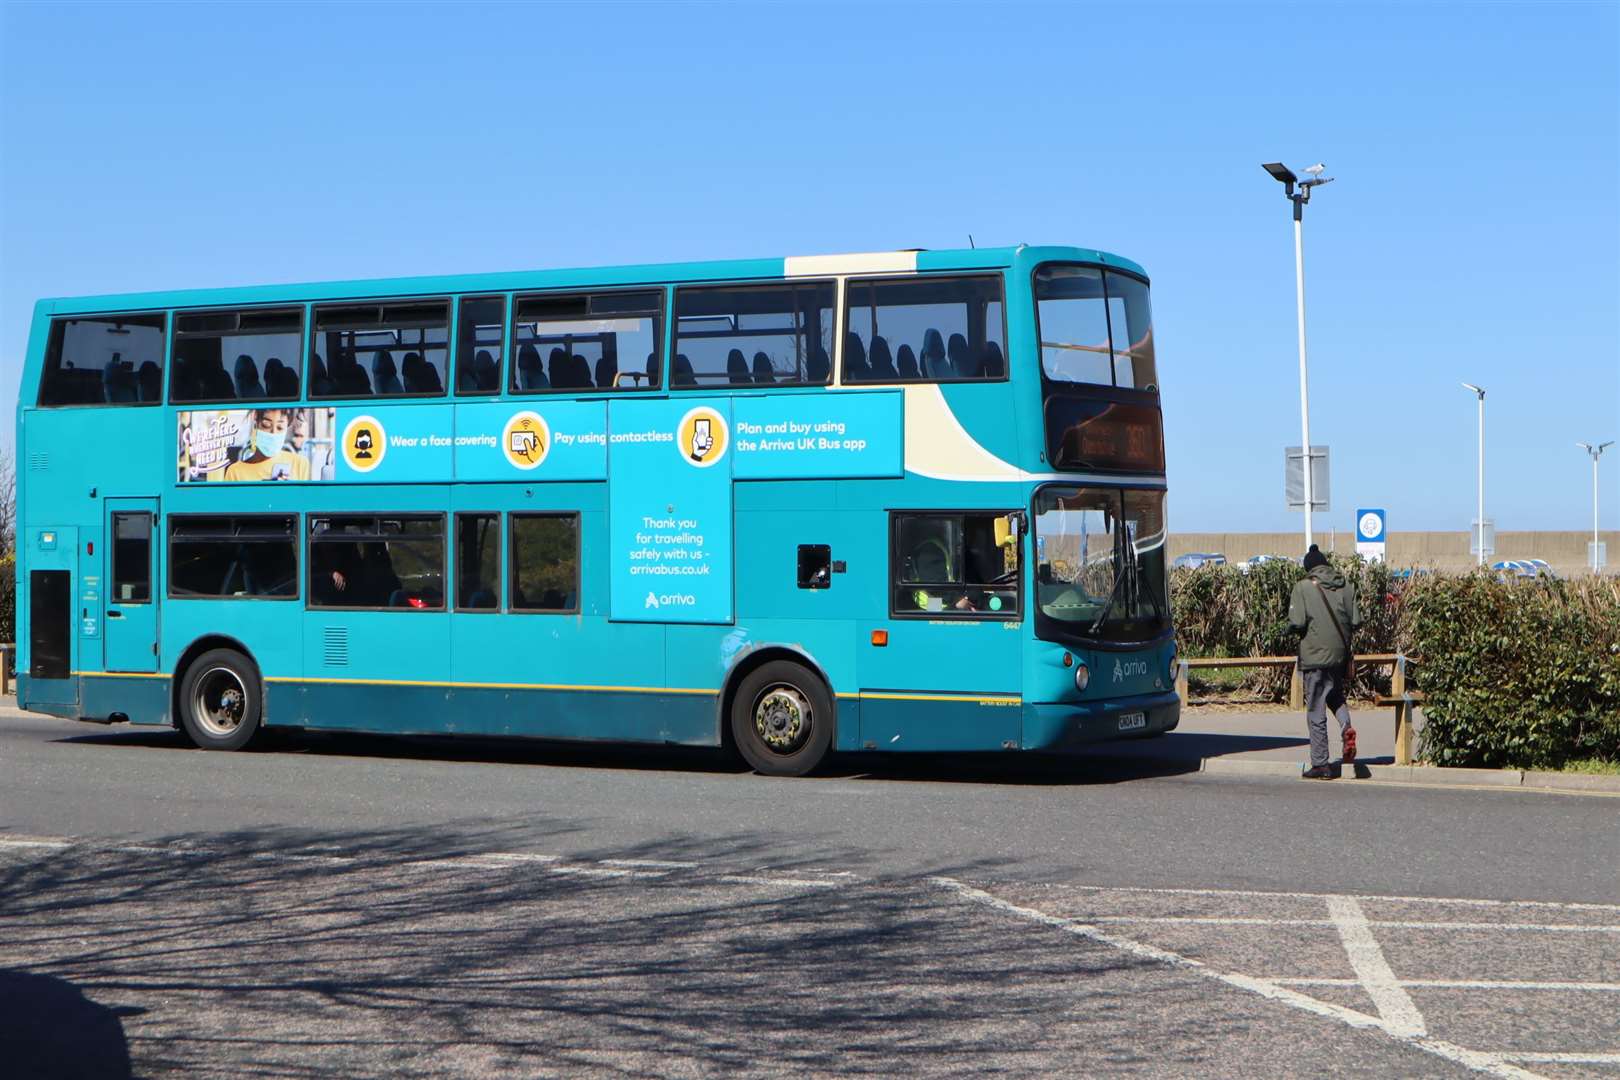 An Arriva double-decker bus leaving Tesco, Sheerness